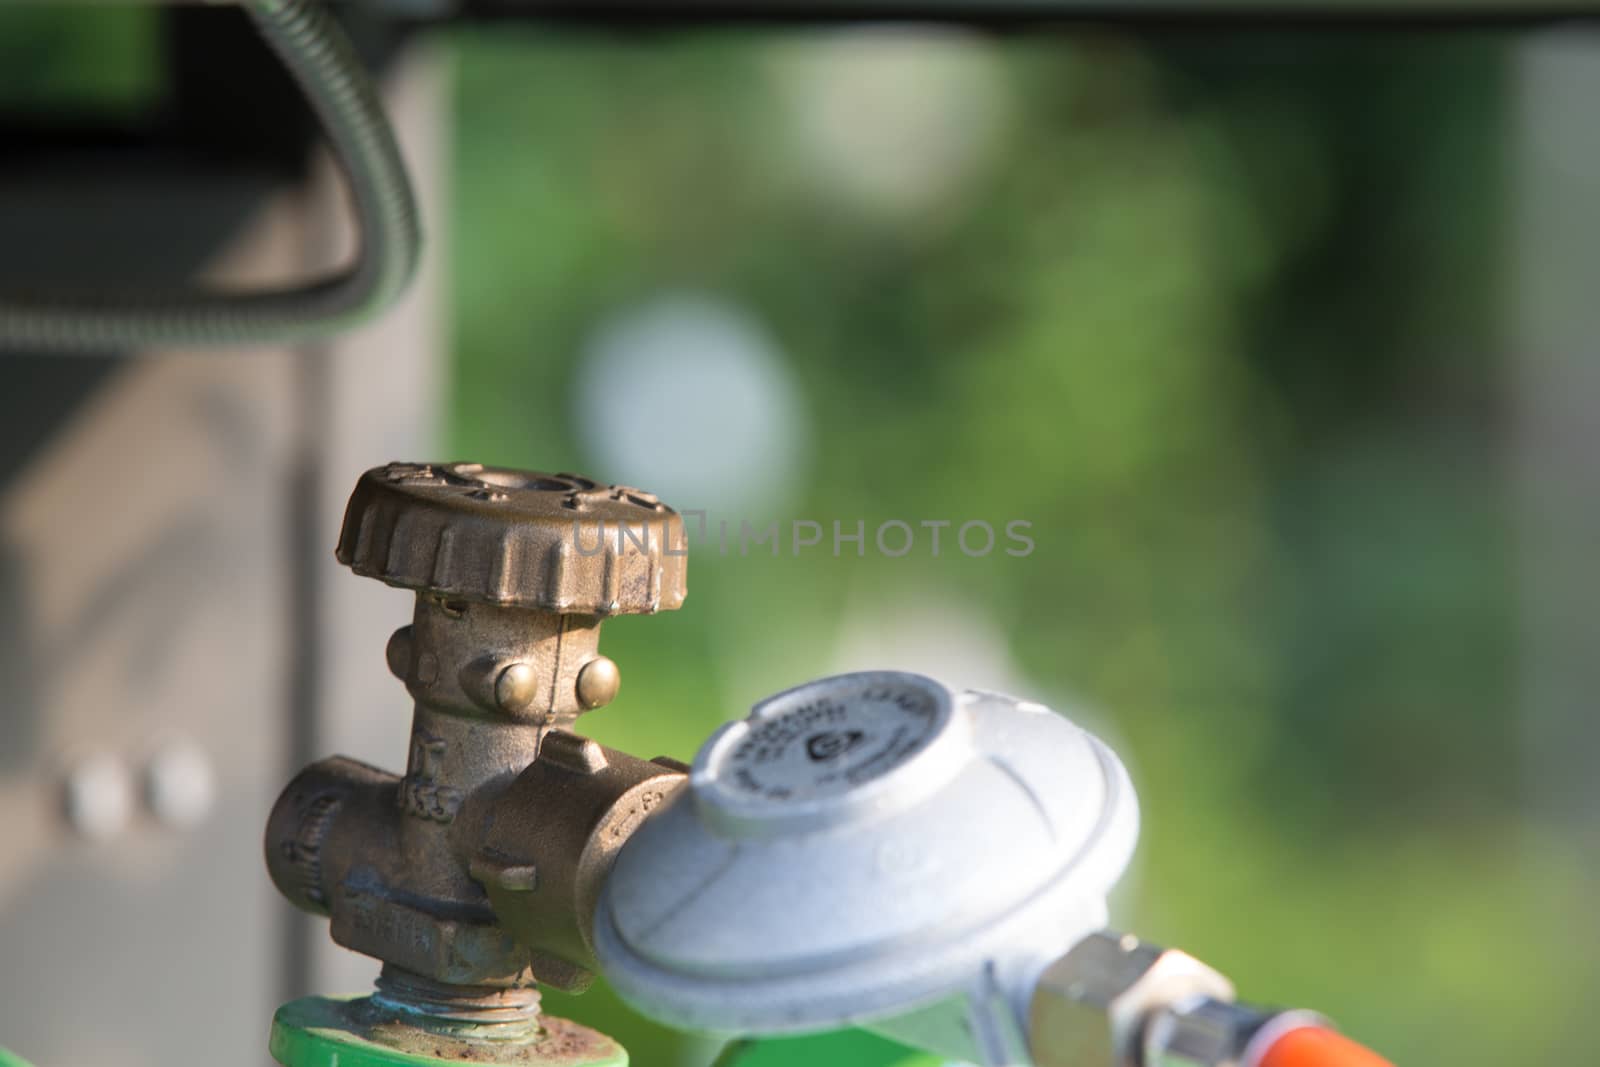 Barbeceue gas bottle closeup with presure indicator